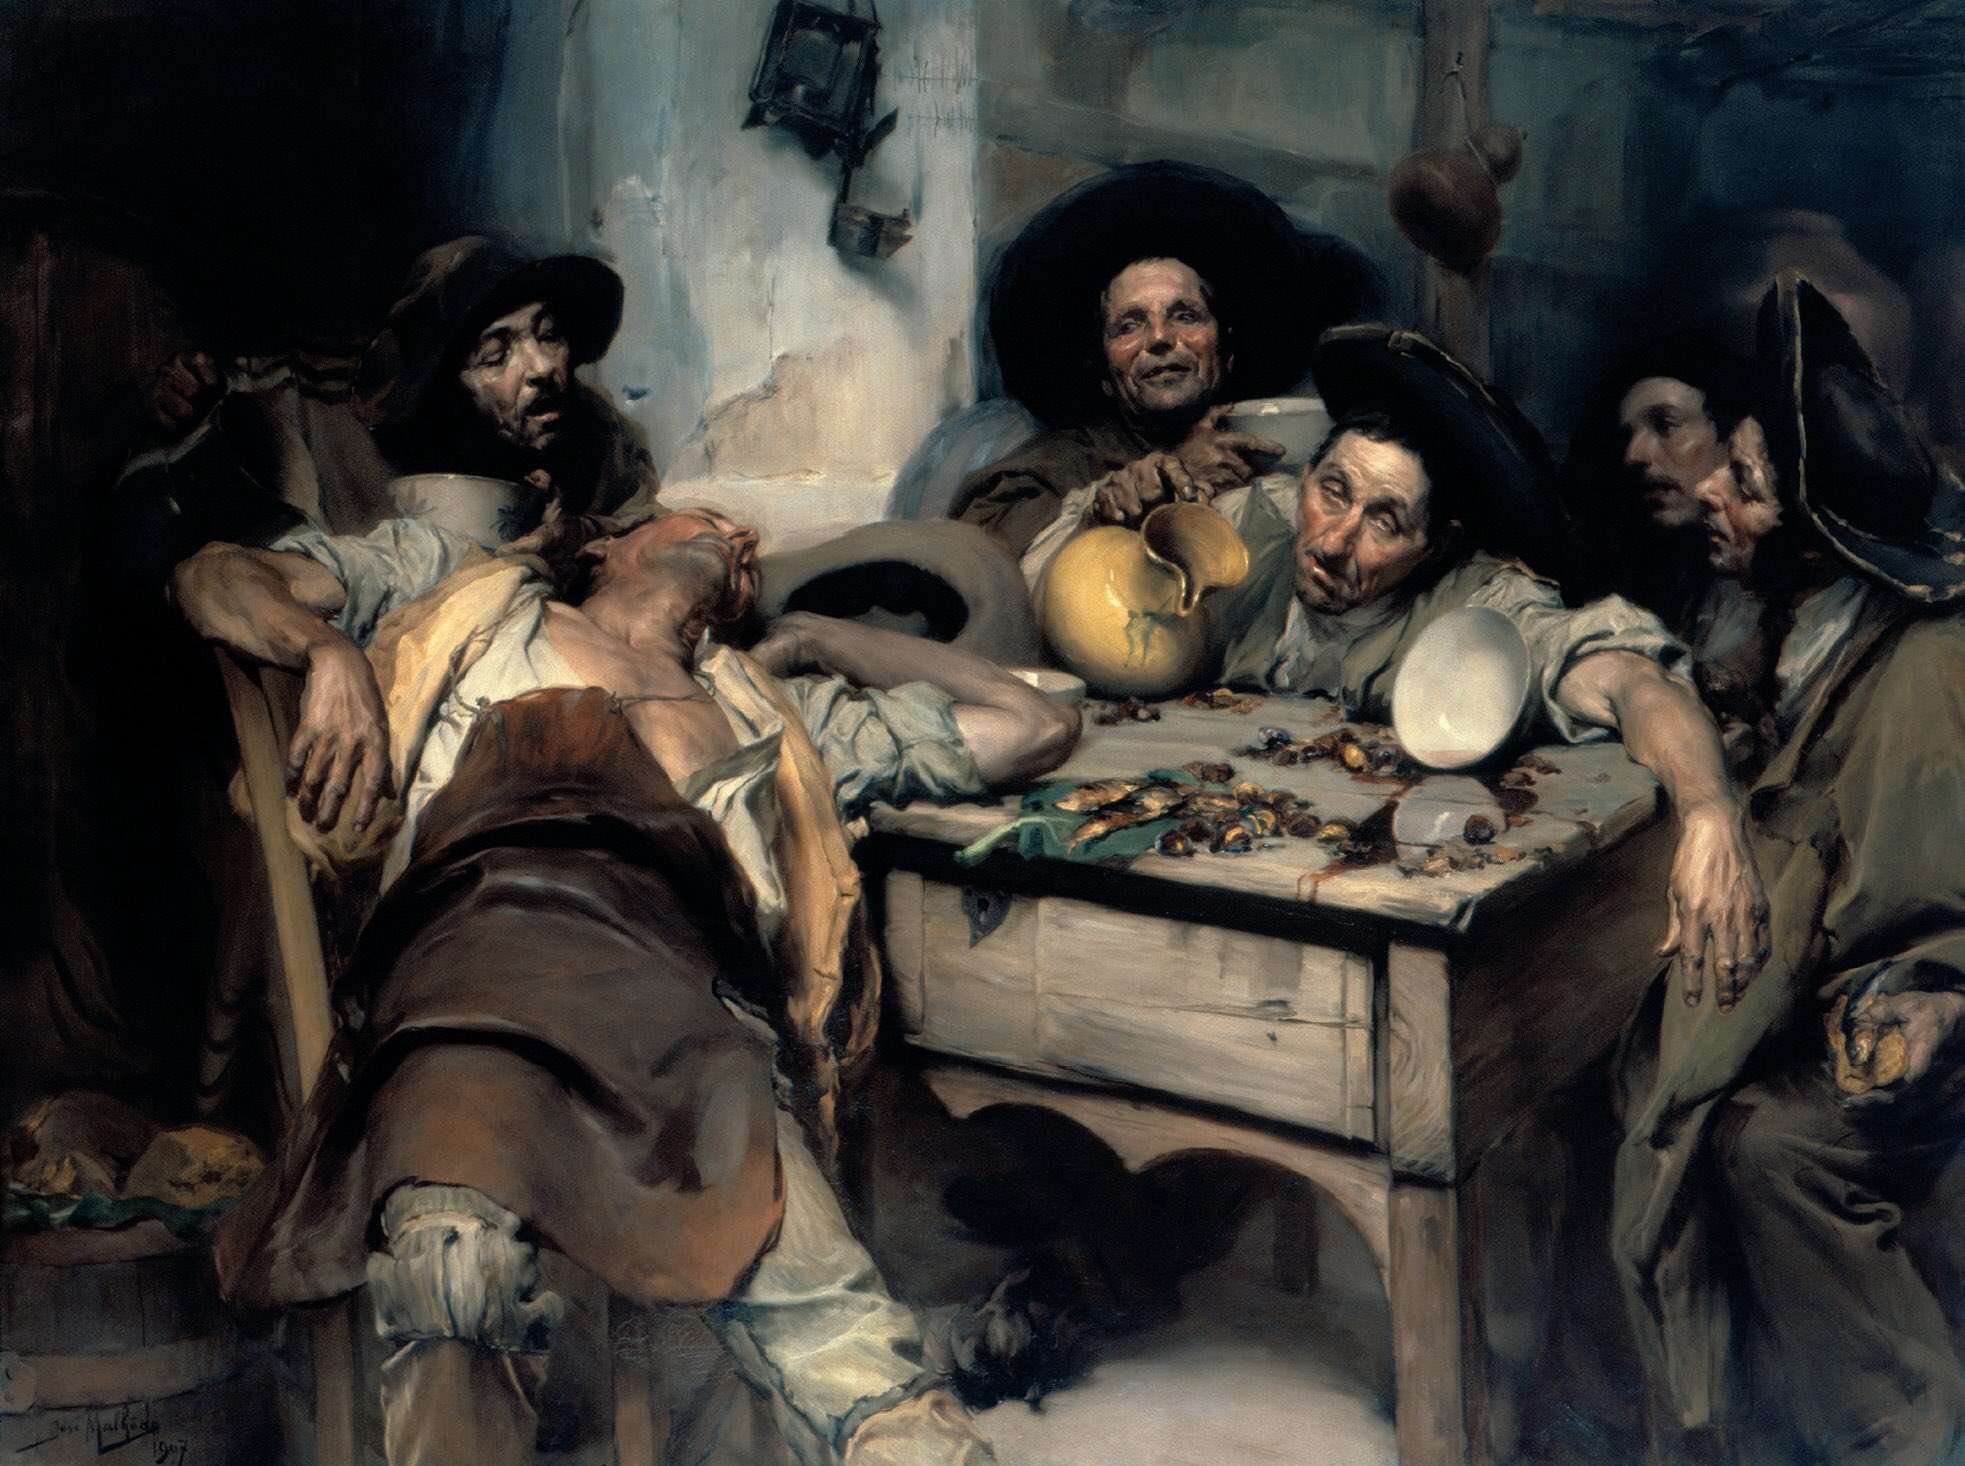 Historia del Arte on Twitter: "“Los borrachos” es una pintura de del  artista portugués, José Malhoa de 1907. https://t.co/5rjyCh9TVs" / Twitter